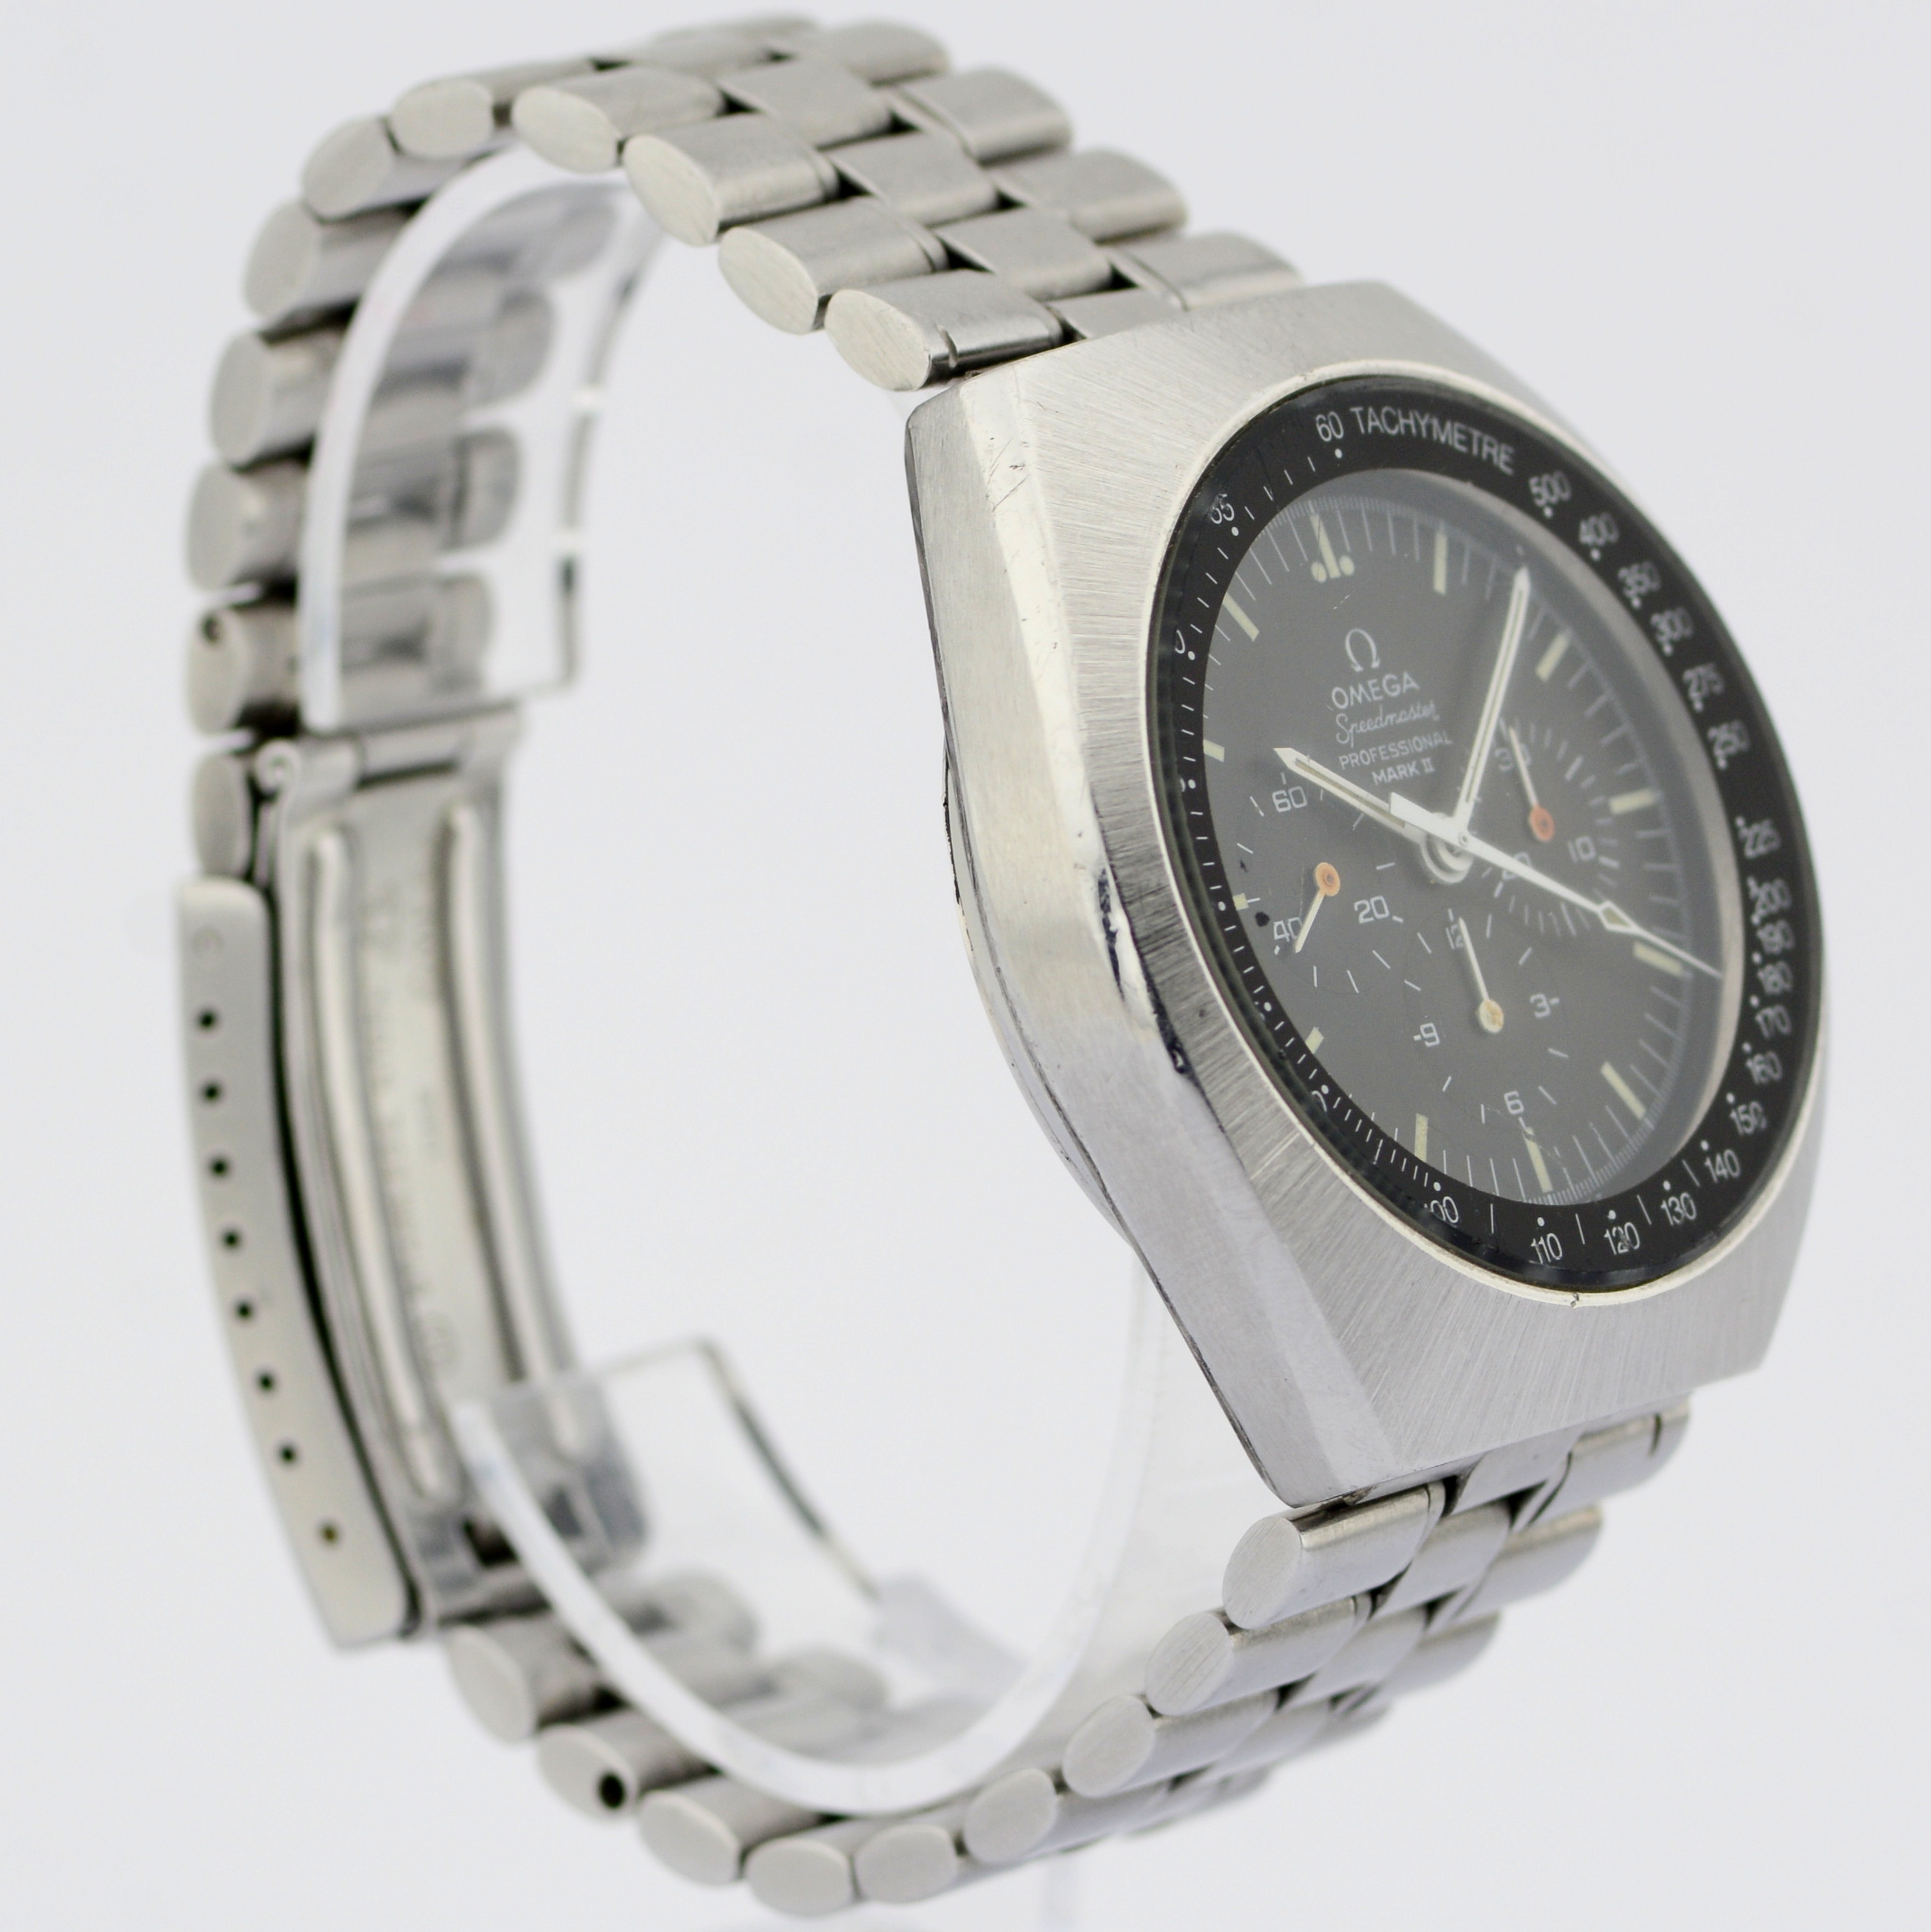 Omega / Speedmaster Mark II - Gentlmen's Steel Wrist Watch - Image 5 of 7